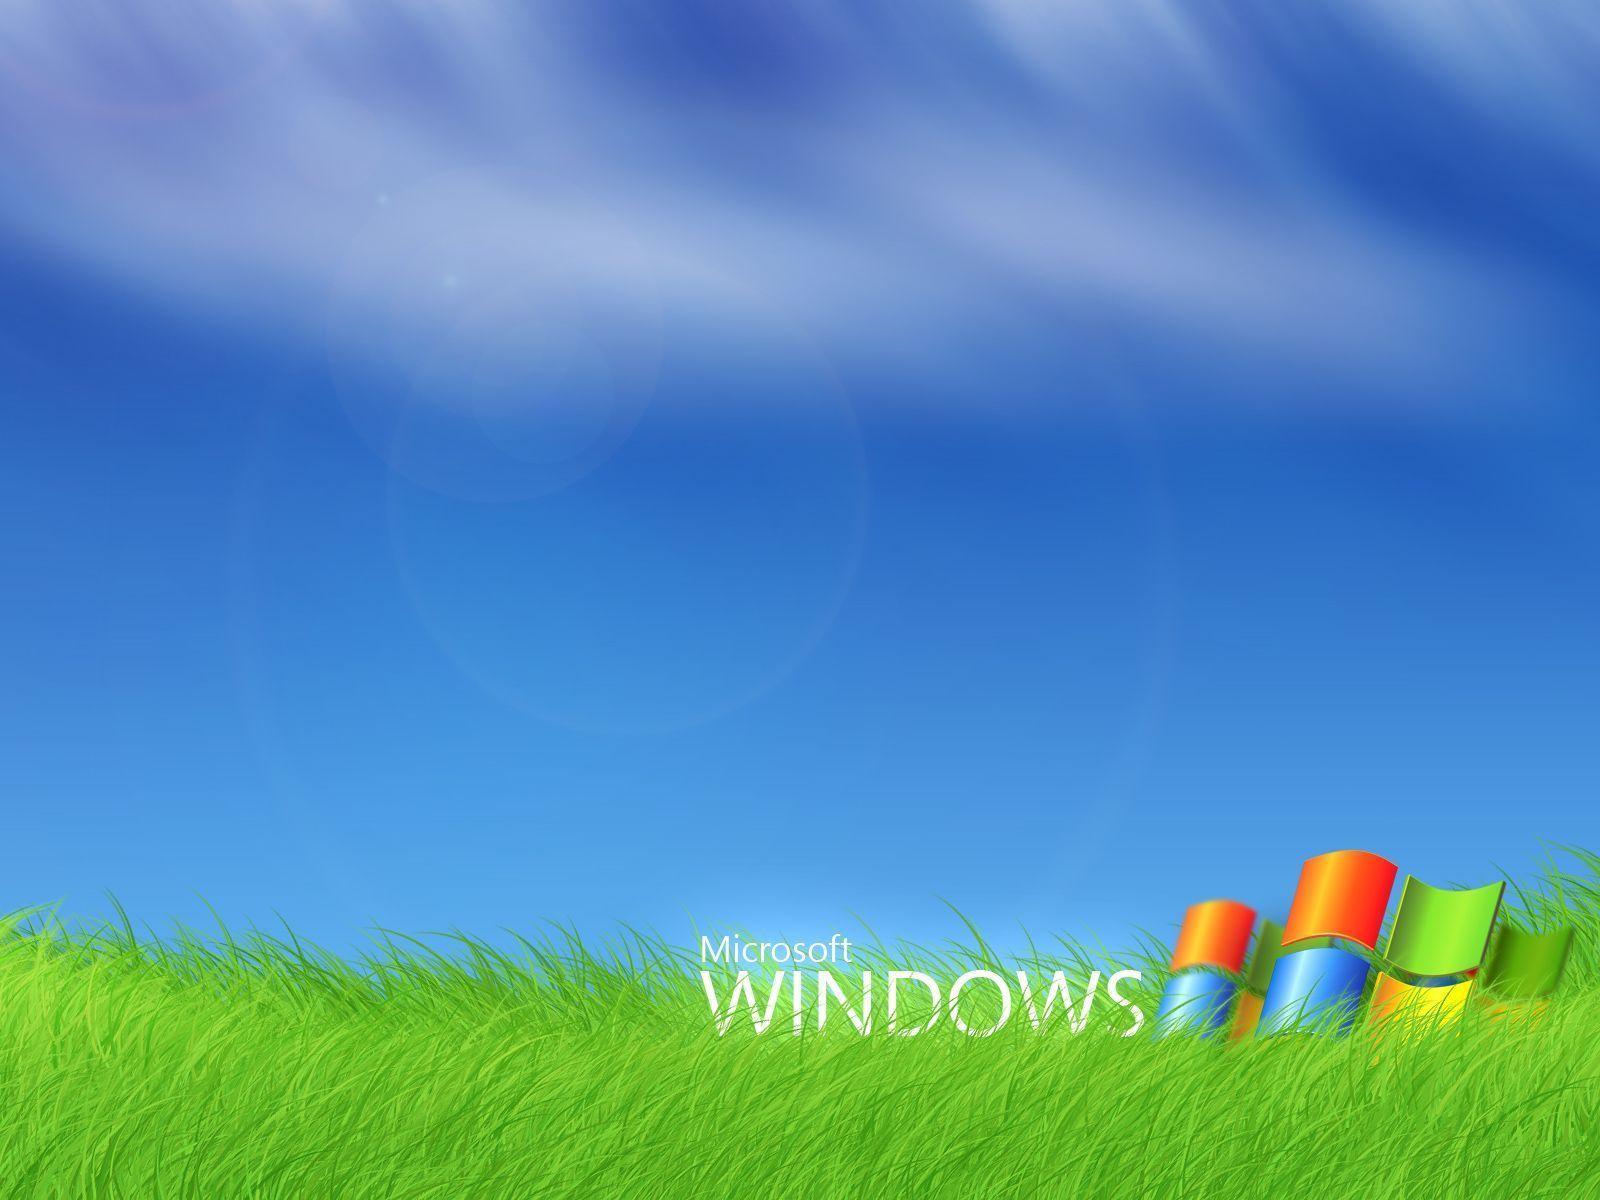 Microsoft Windows Wallpaper Wallpaper. walldesktophd